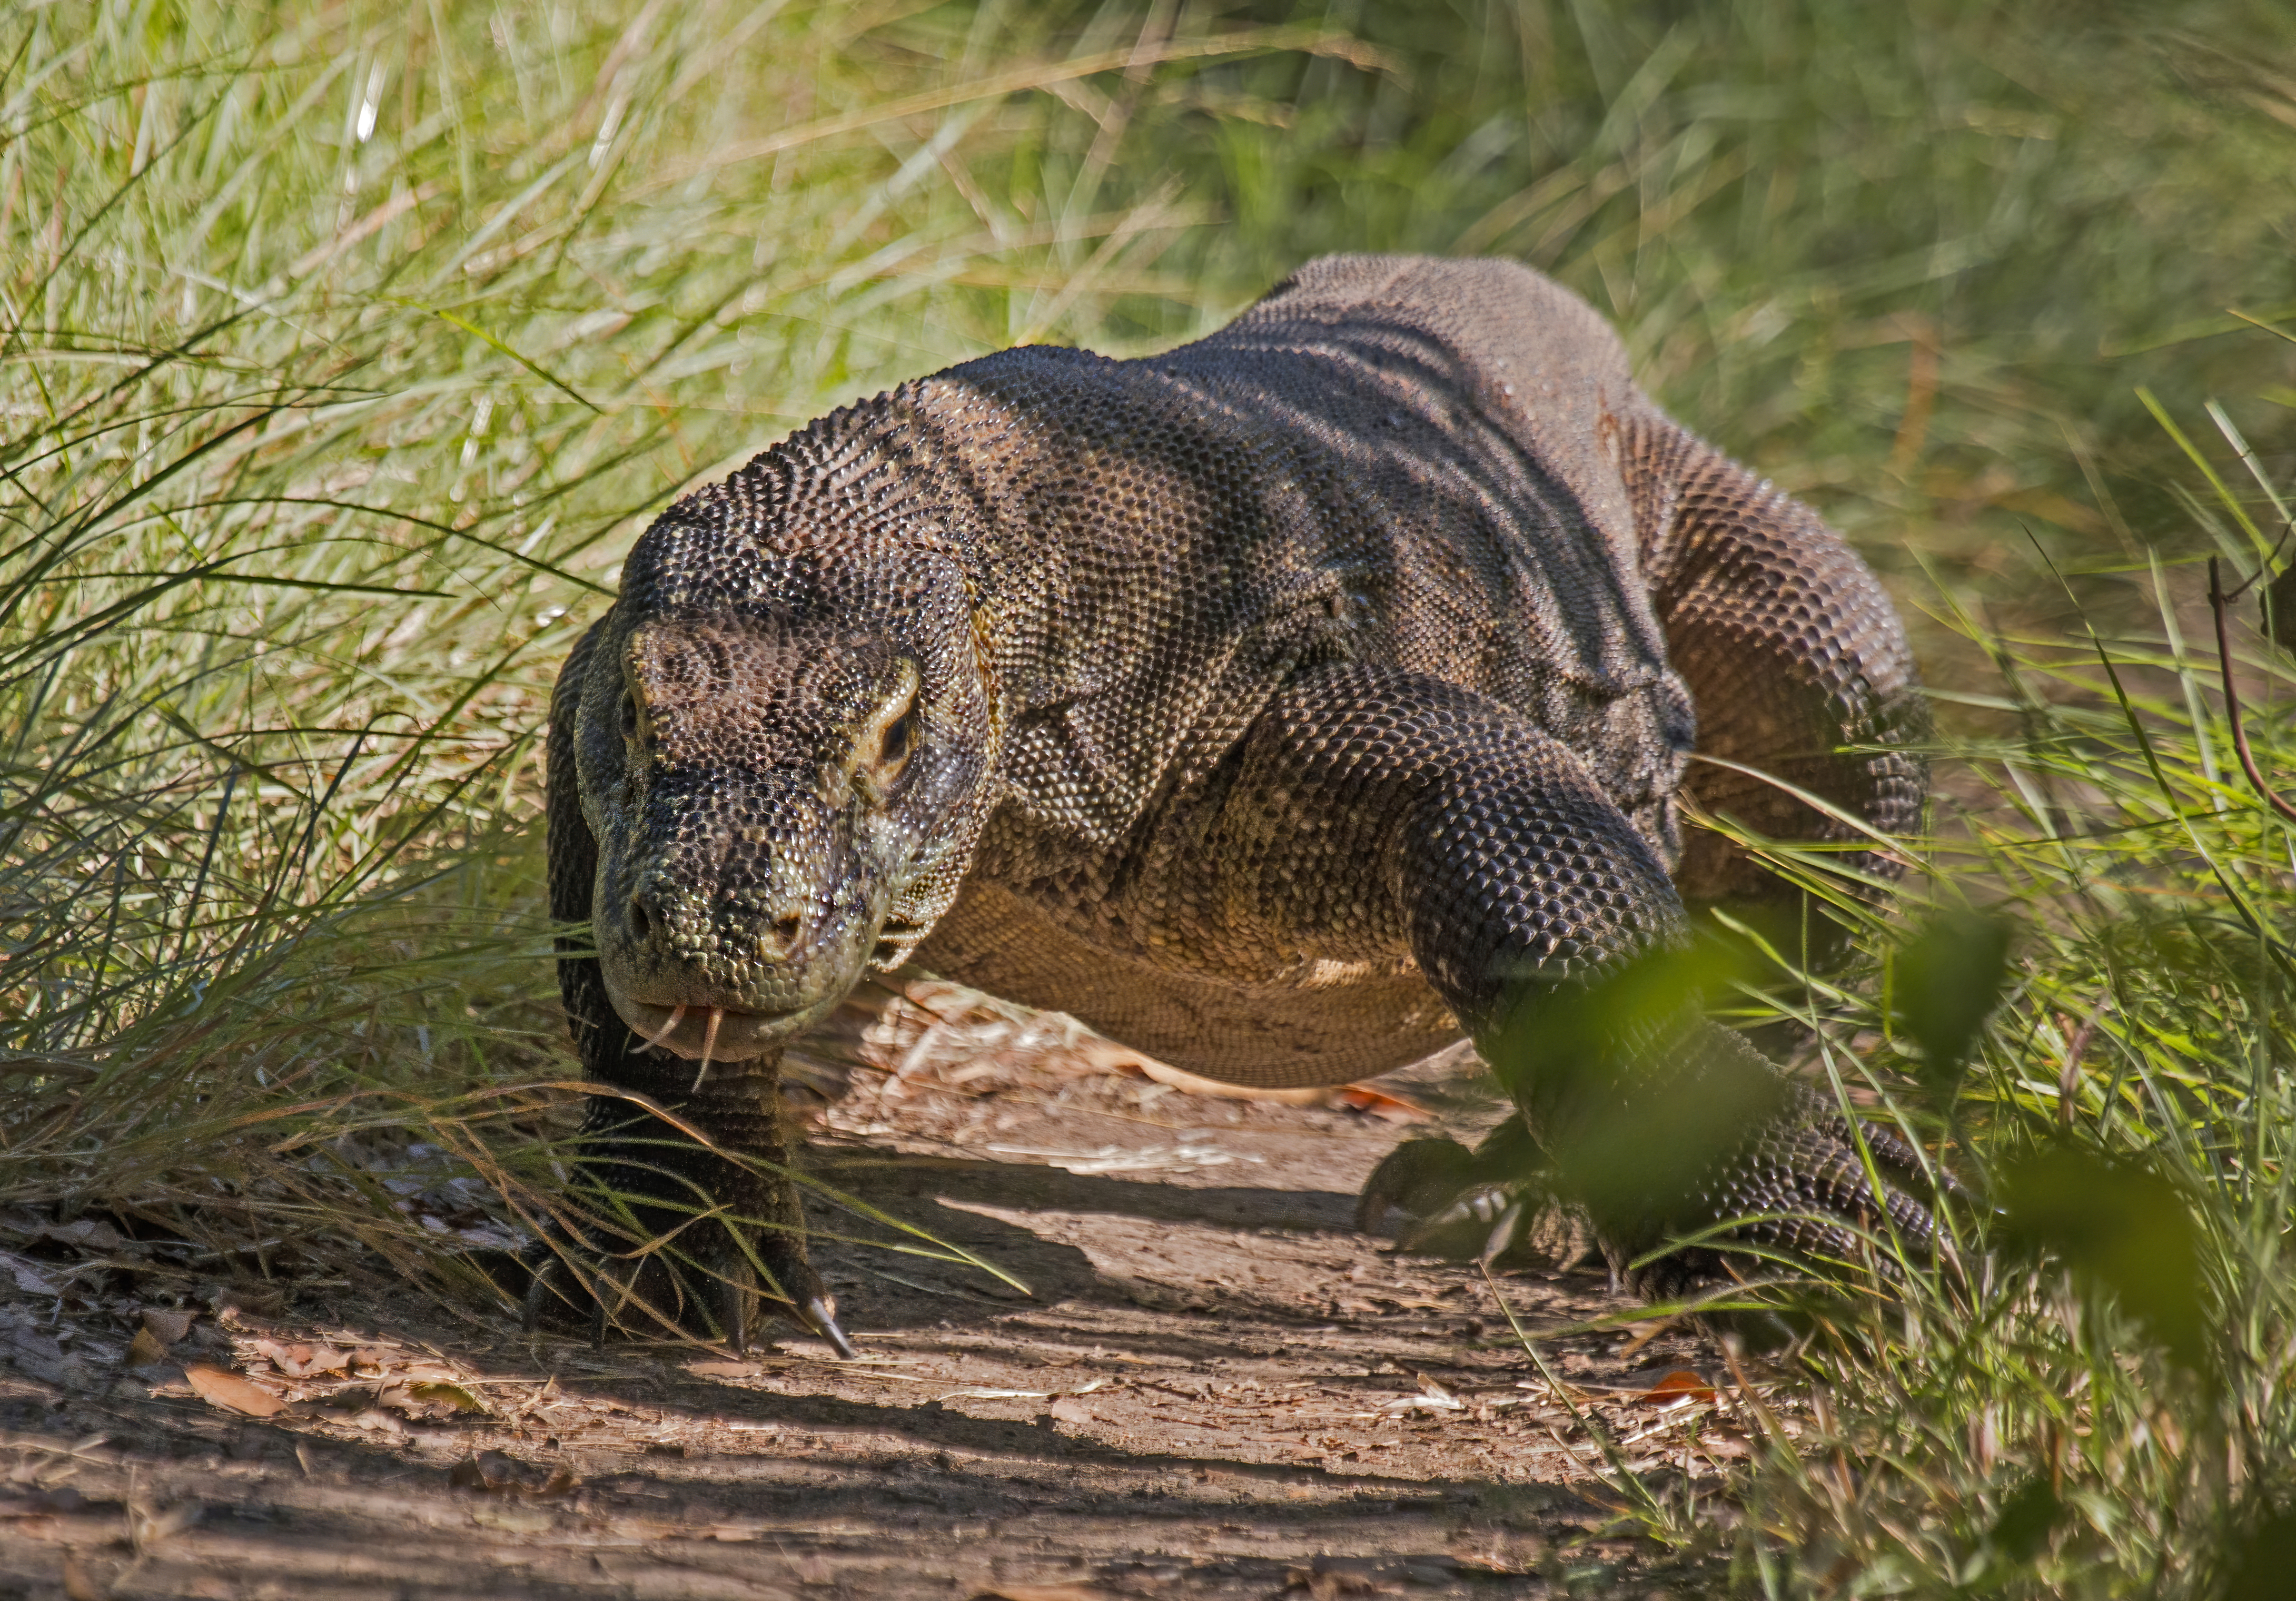 What makes a Komodo dragon a reptile?